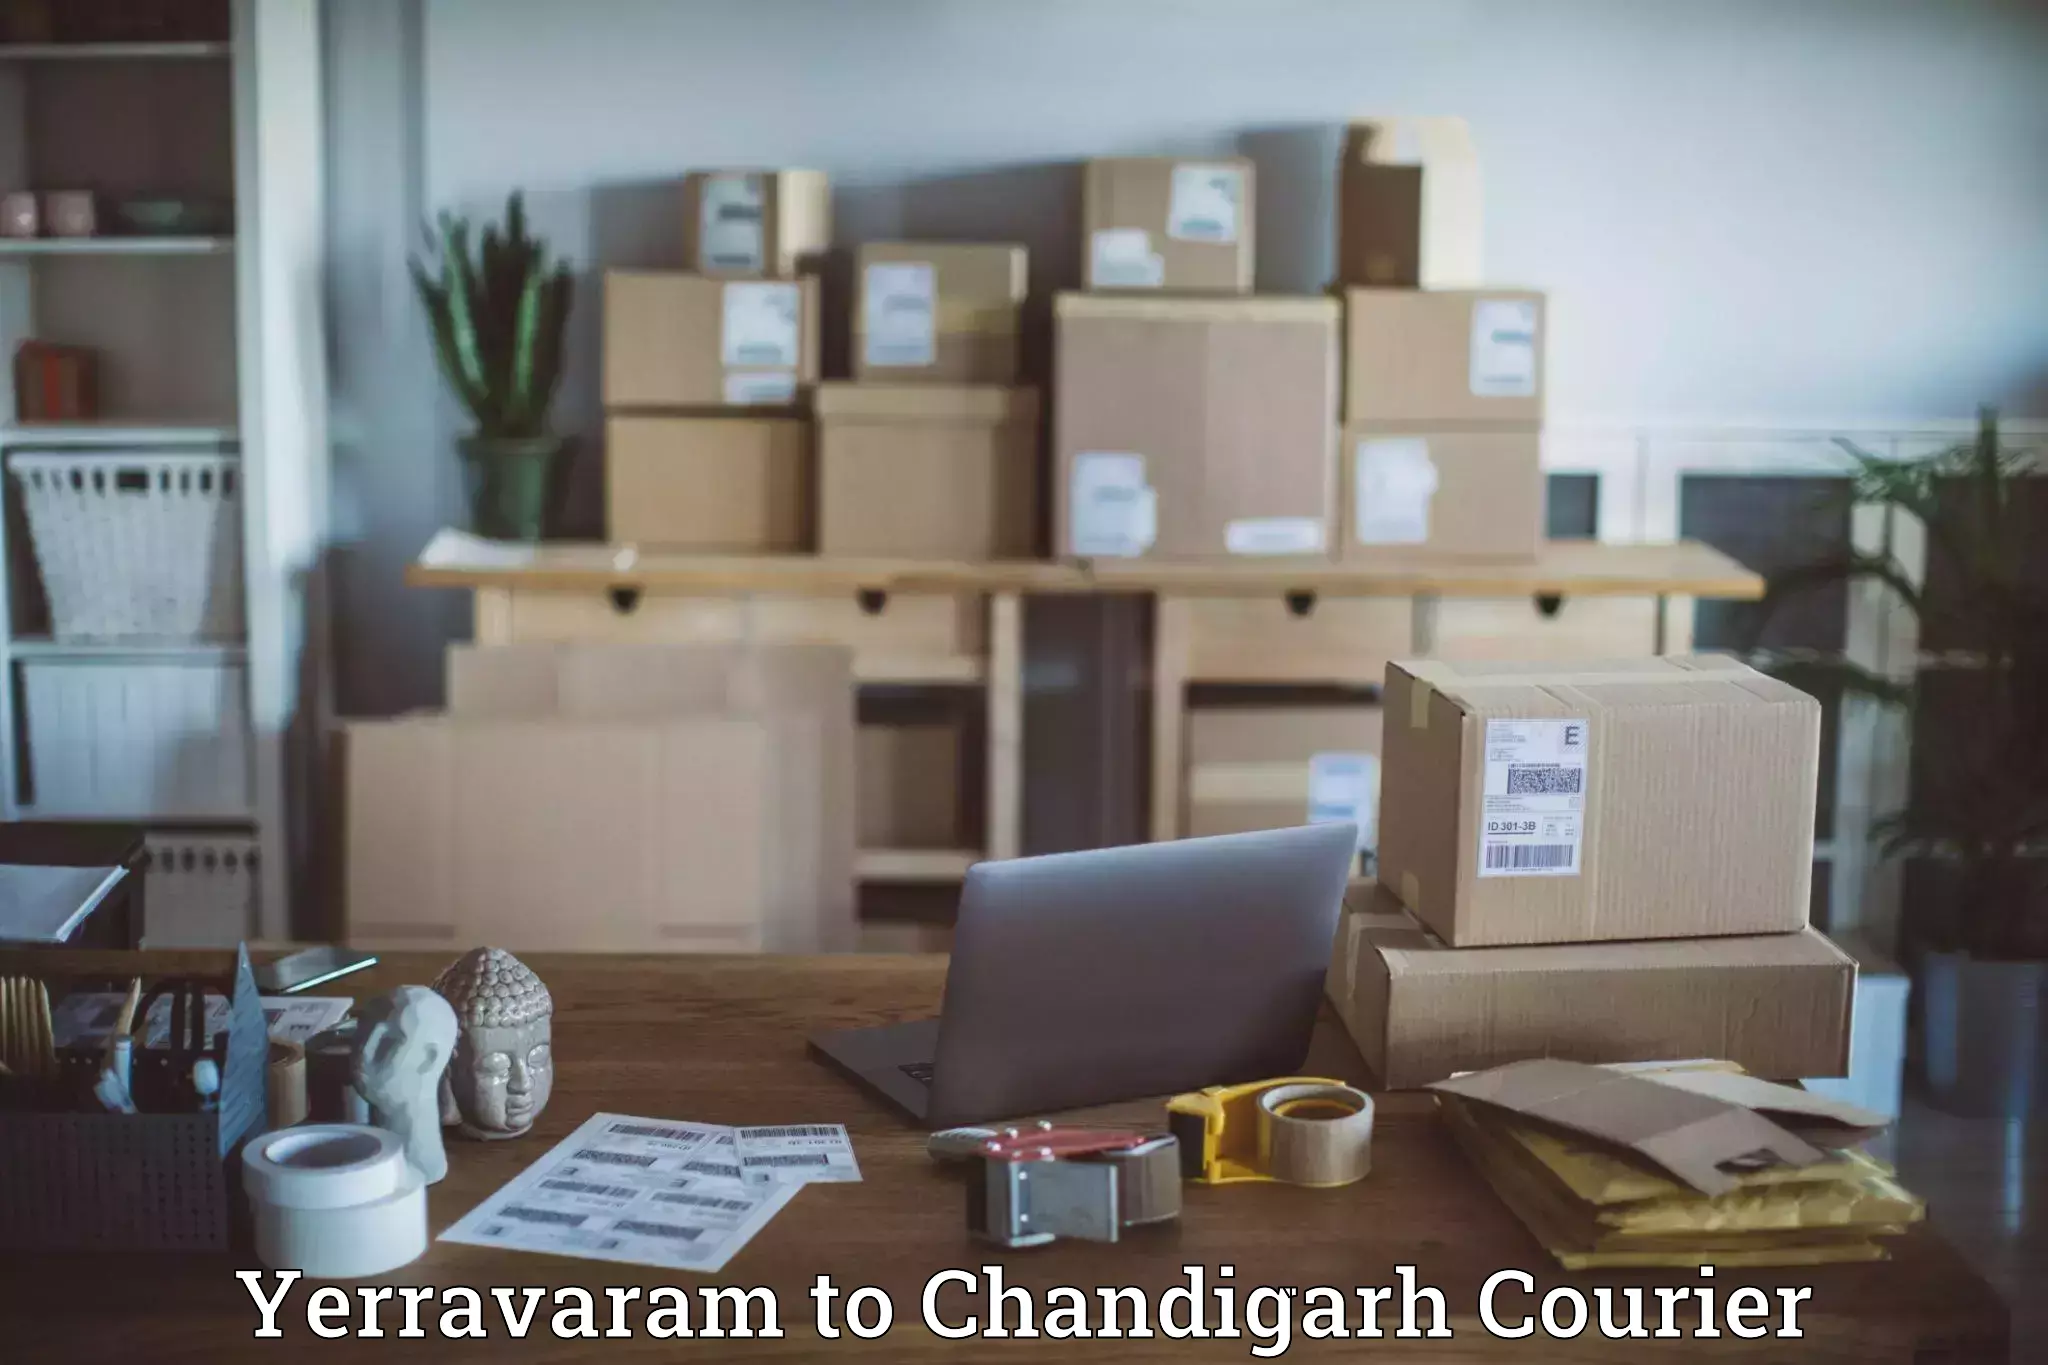 Courier service innovation Yerravaram to Chandigarh